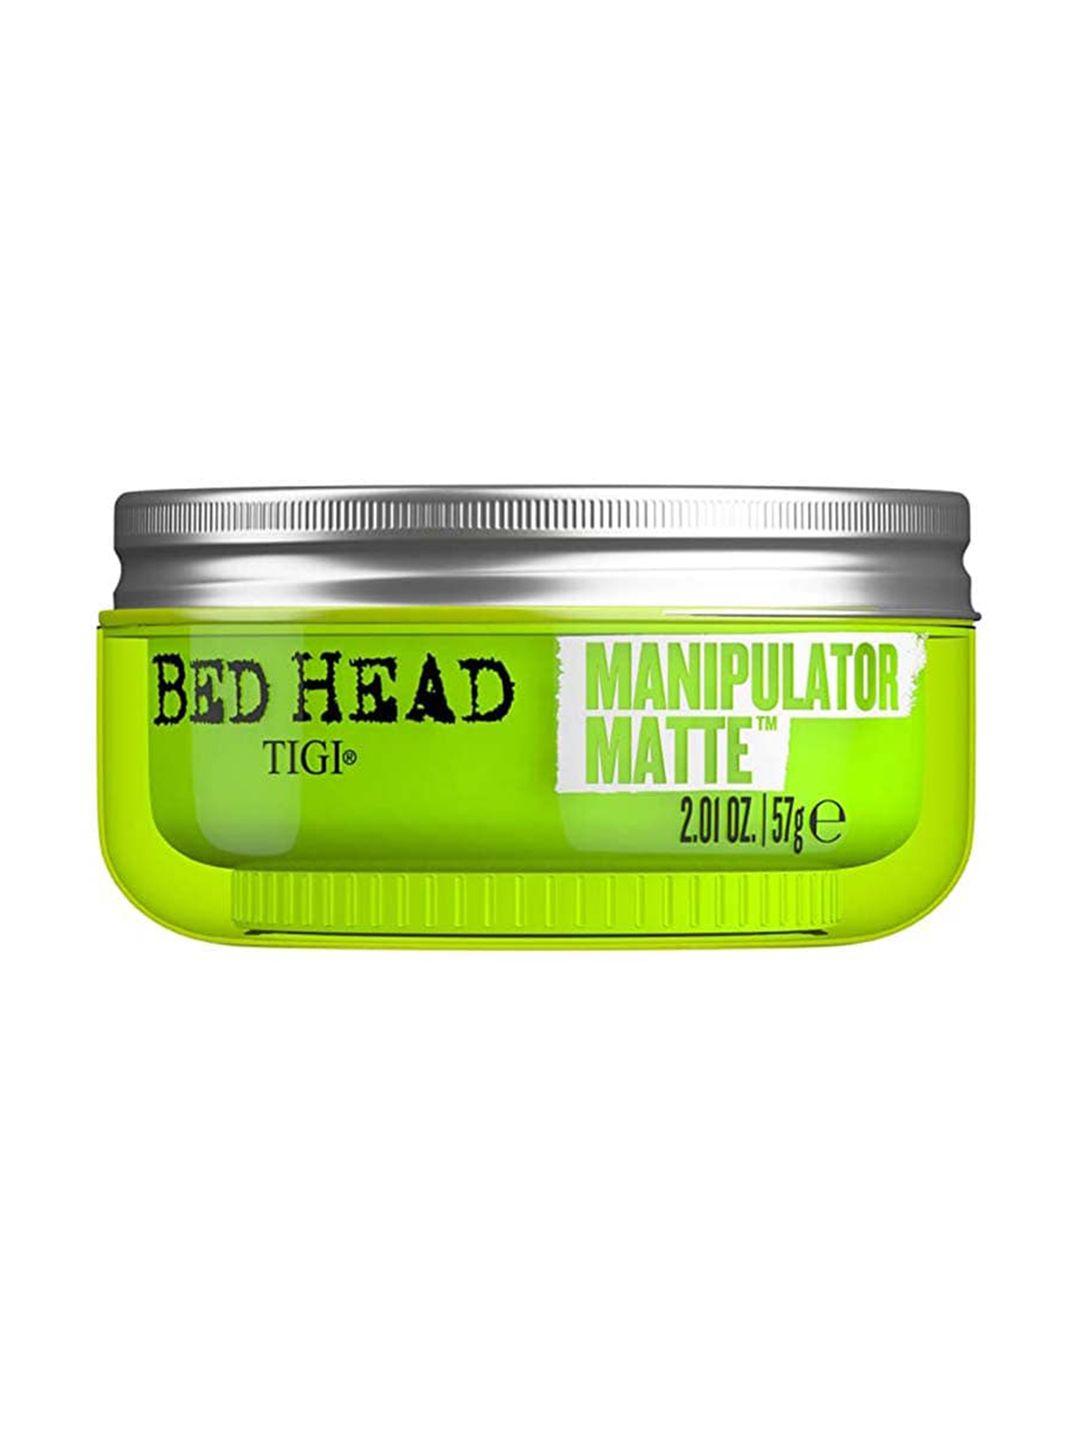 tigi bed head manipulator matte hair wax - 57g